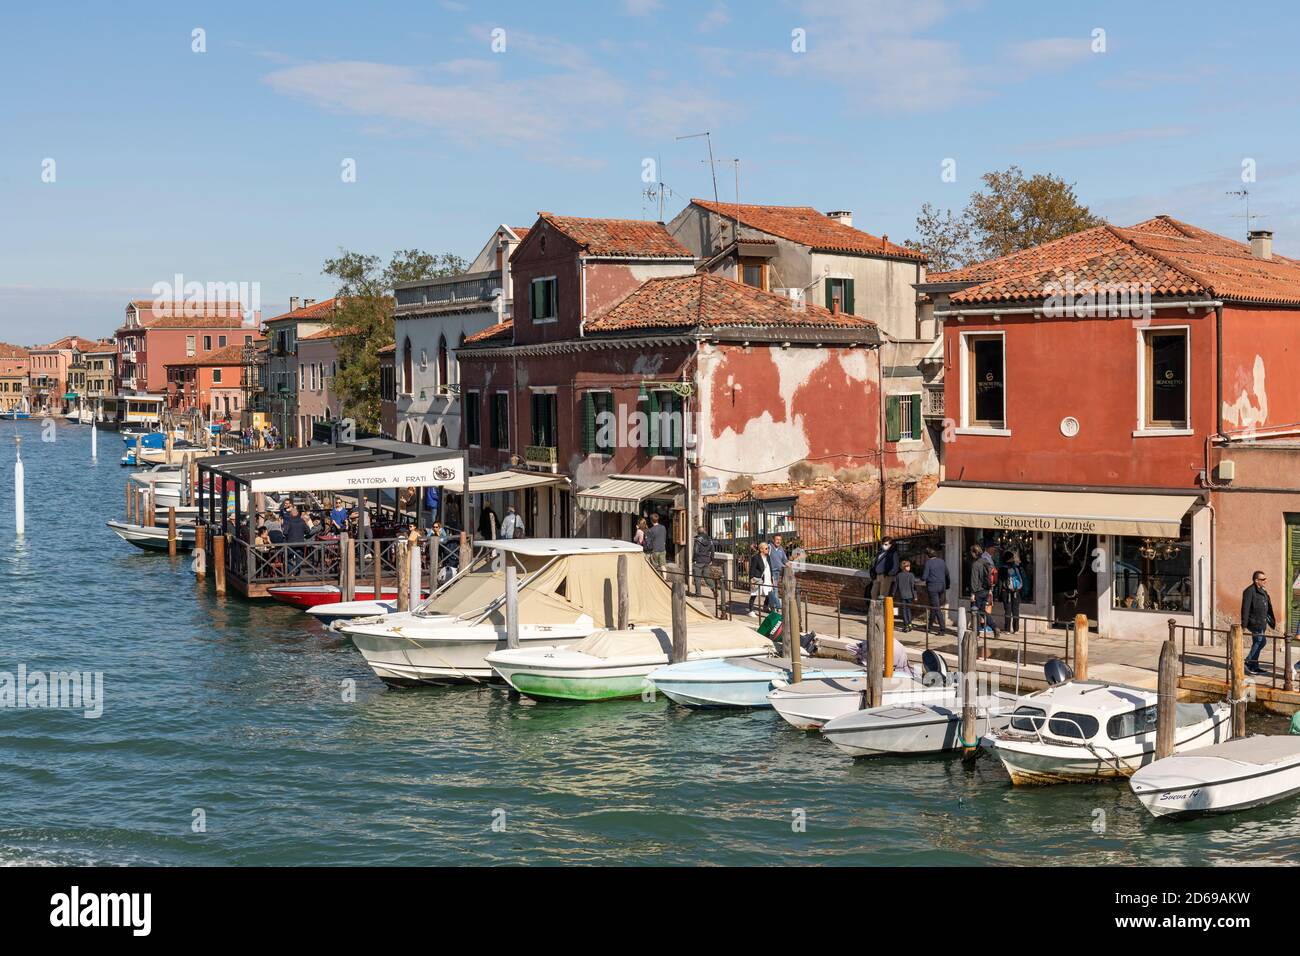 The Venetian Lagoon island of Murano - The Rio dei Vetrai and historic picturesque buildings with boats and cafe.  Murano, Venice, Italy. 2020 Stock Photo